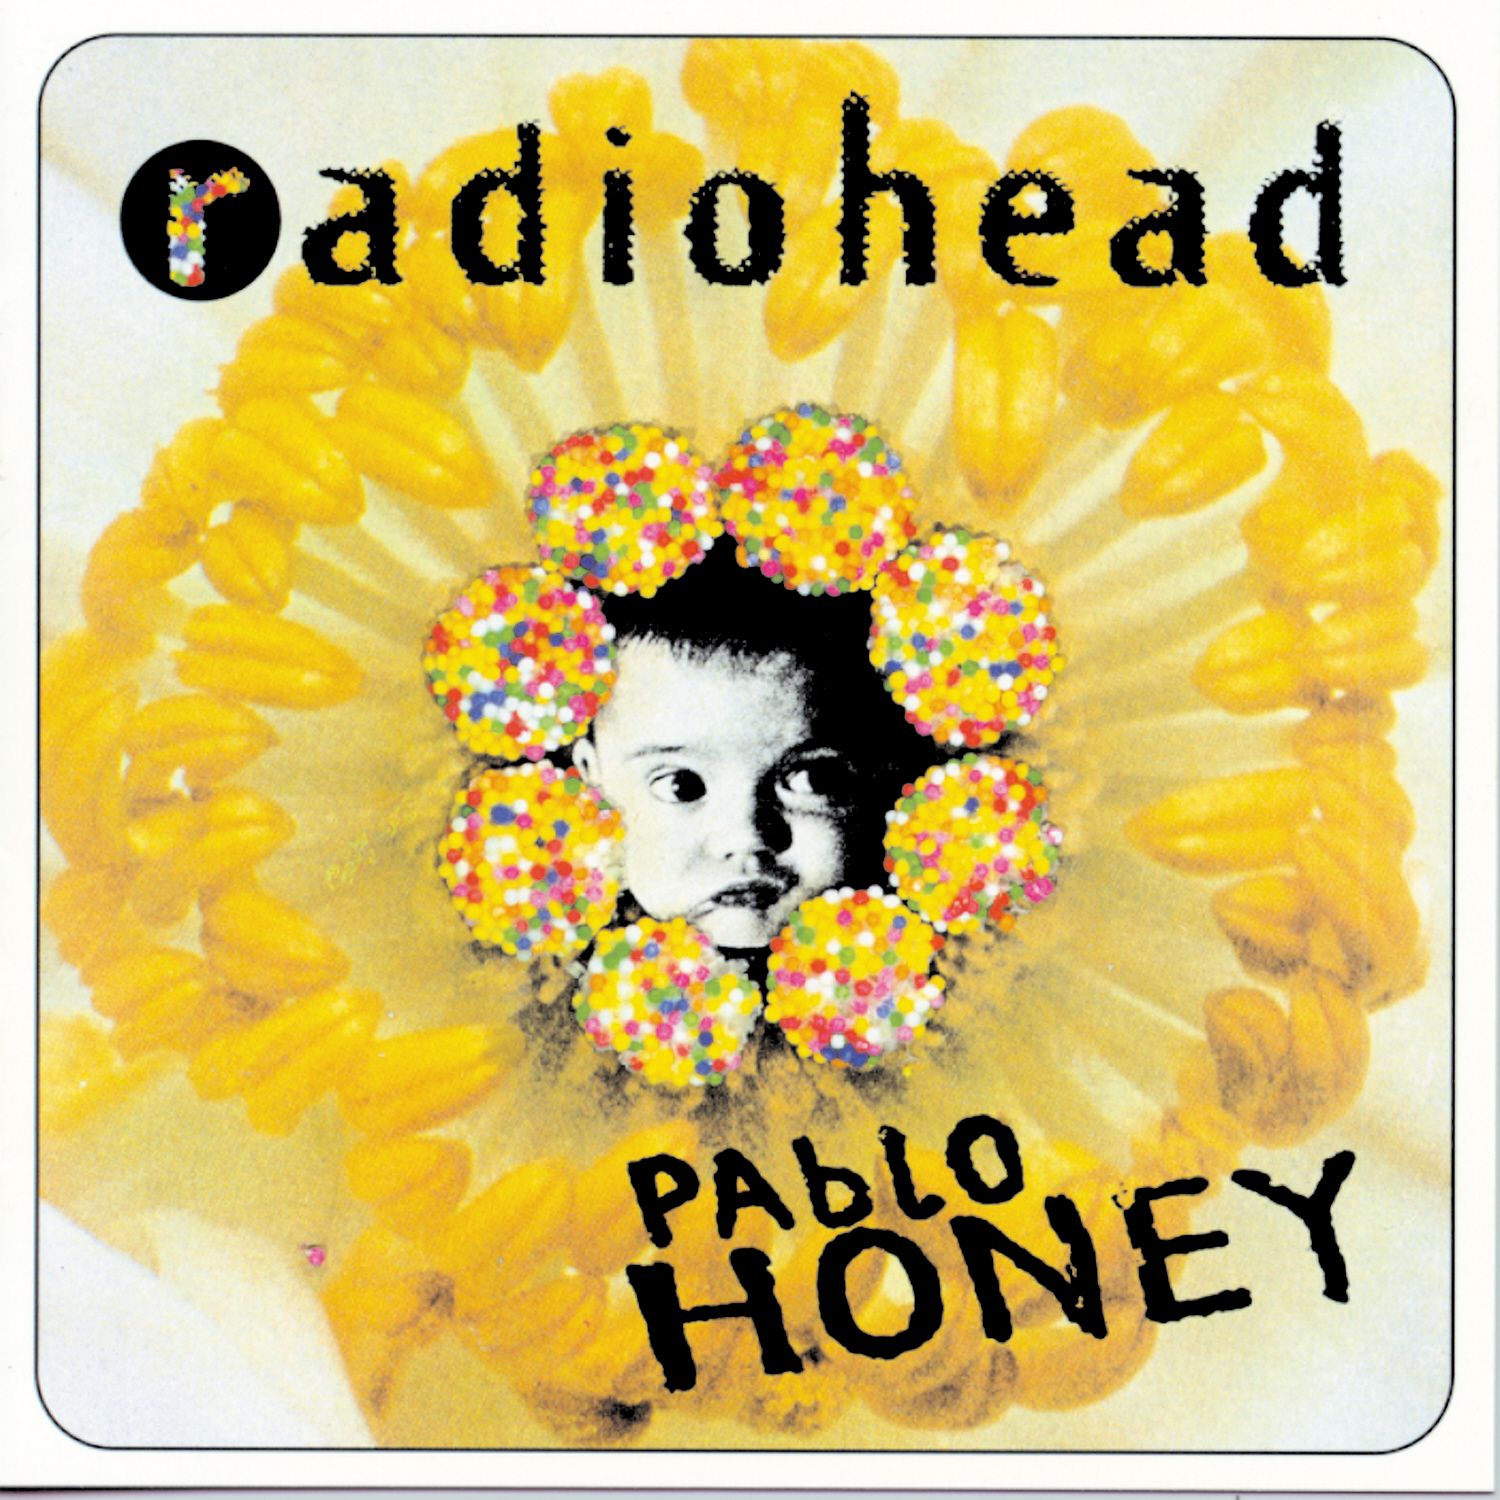 22 februari 1993: Radiohead brengt Pablo Honey uit!